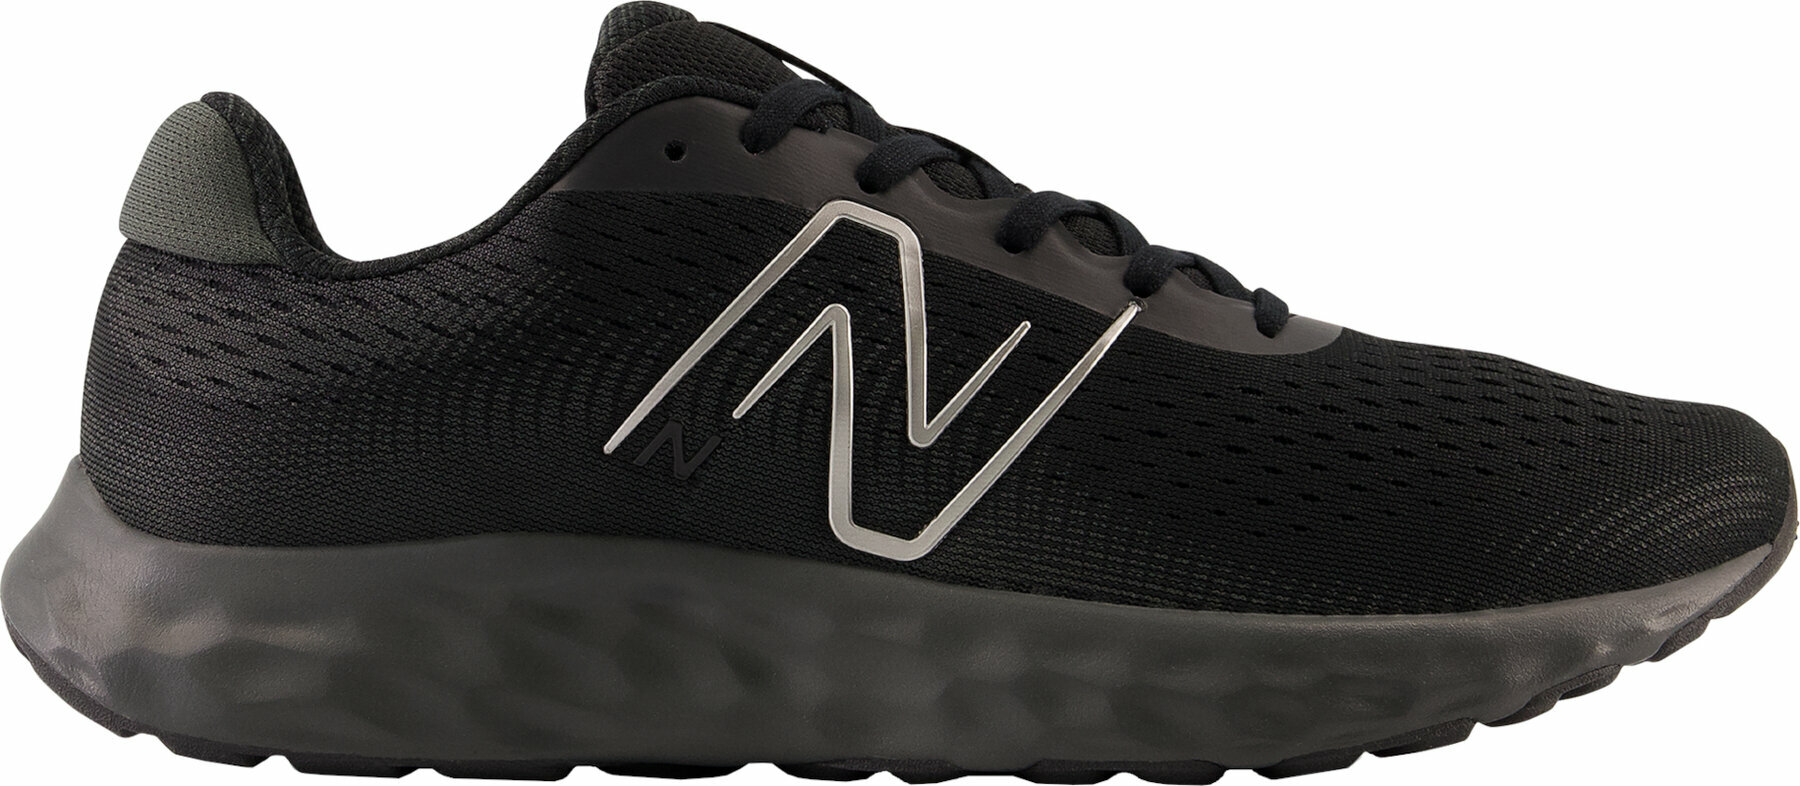 Zapatillas para correr New Balance Mens M520 Black 43 Zapatillas para correr